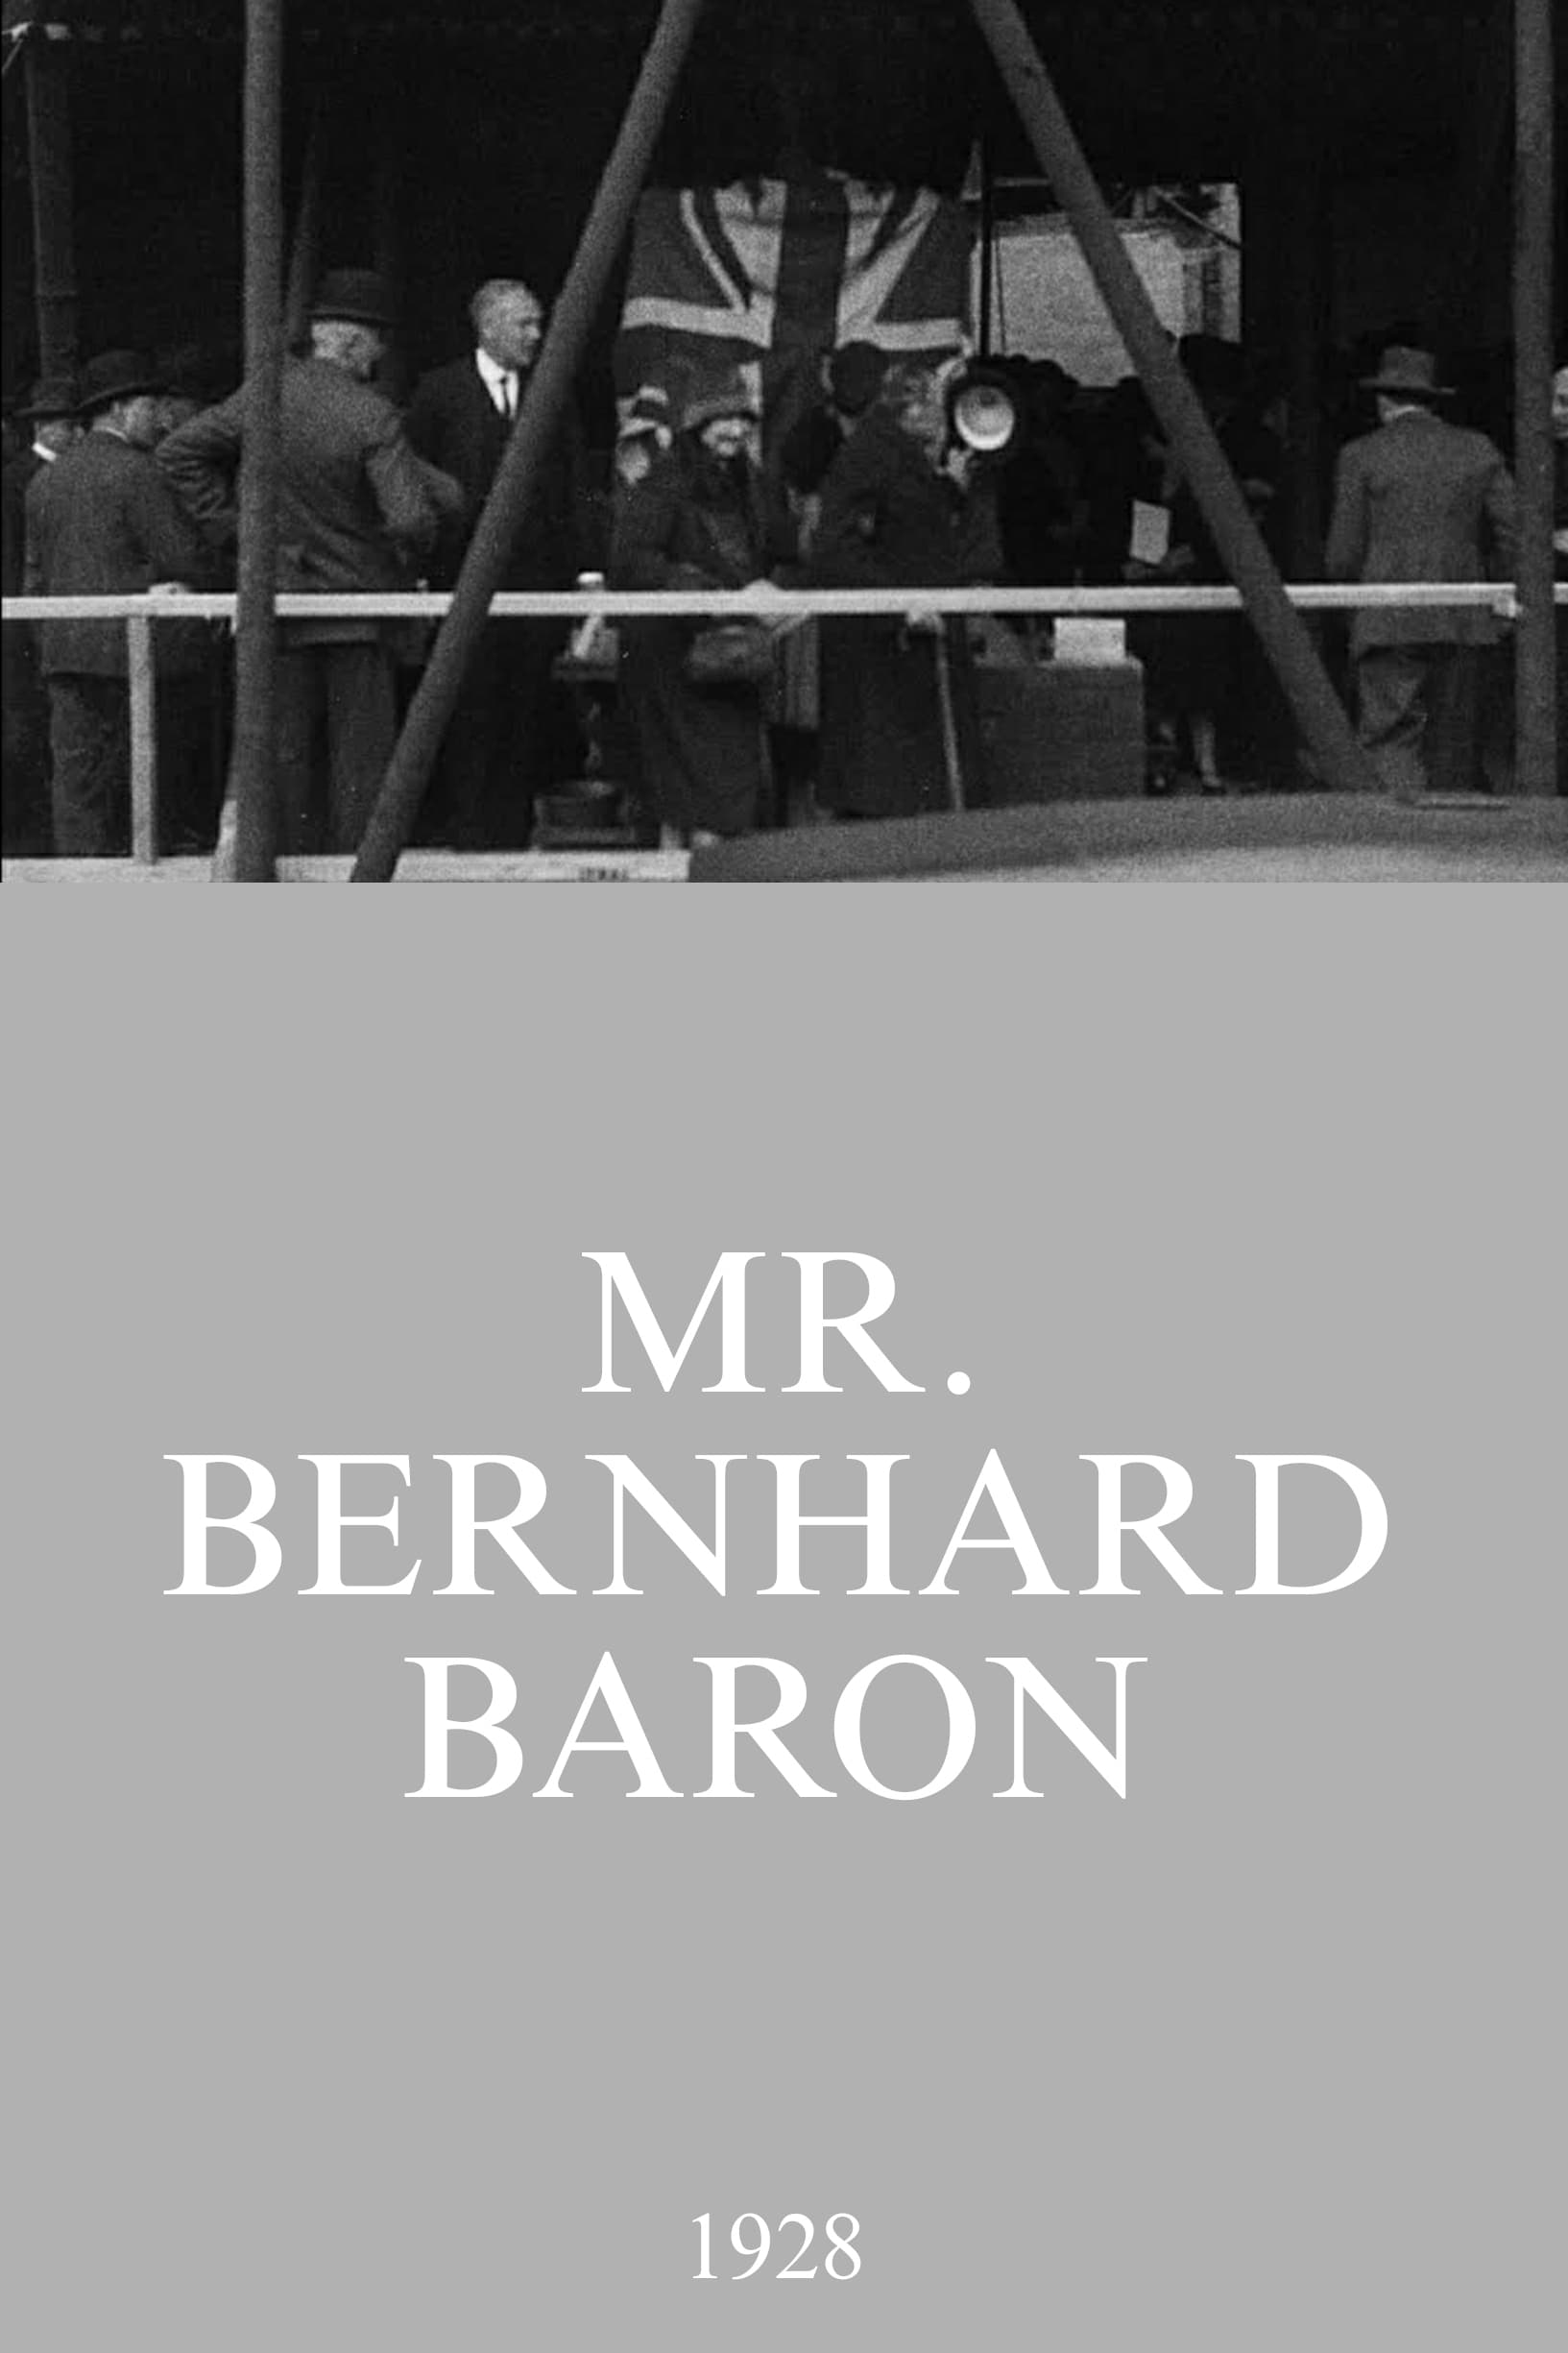 Mr. Bernhard Baron